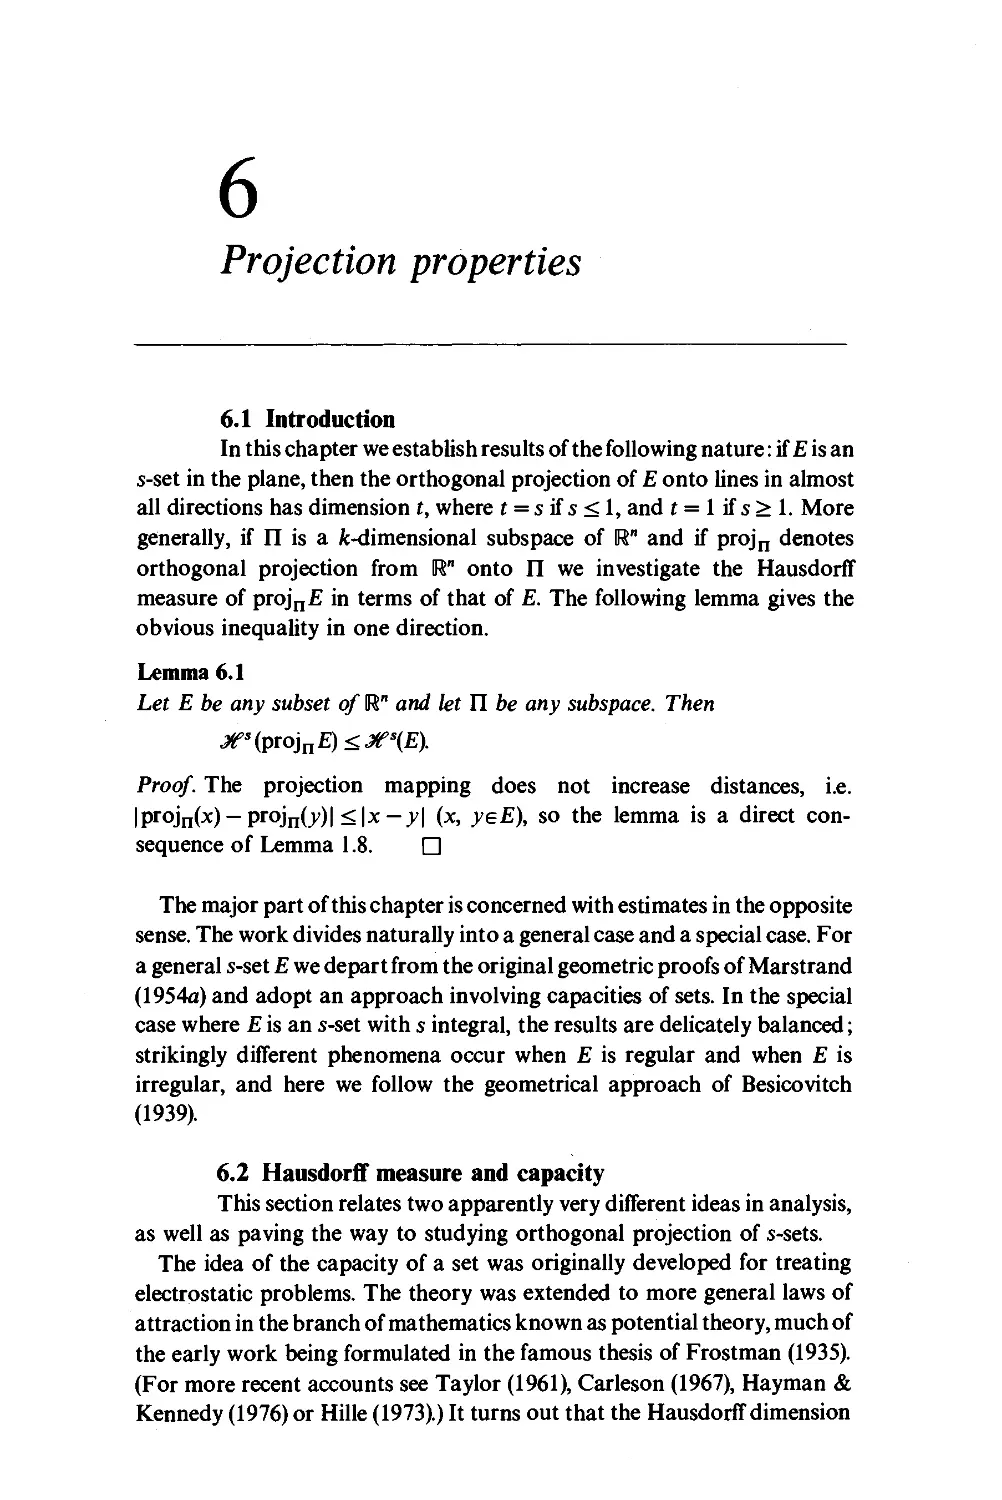 6 Projection properties
6.2 Hausdorff measure and capacity